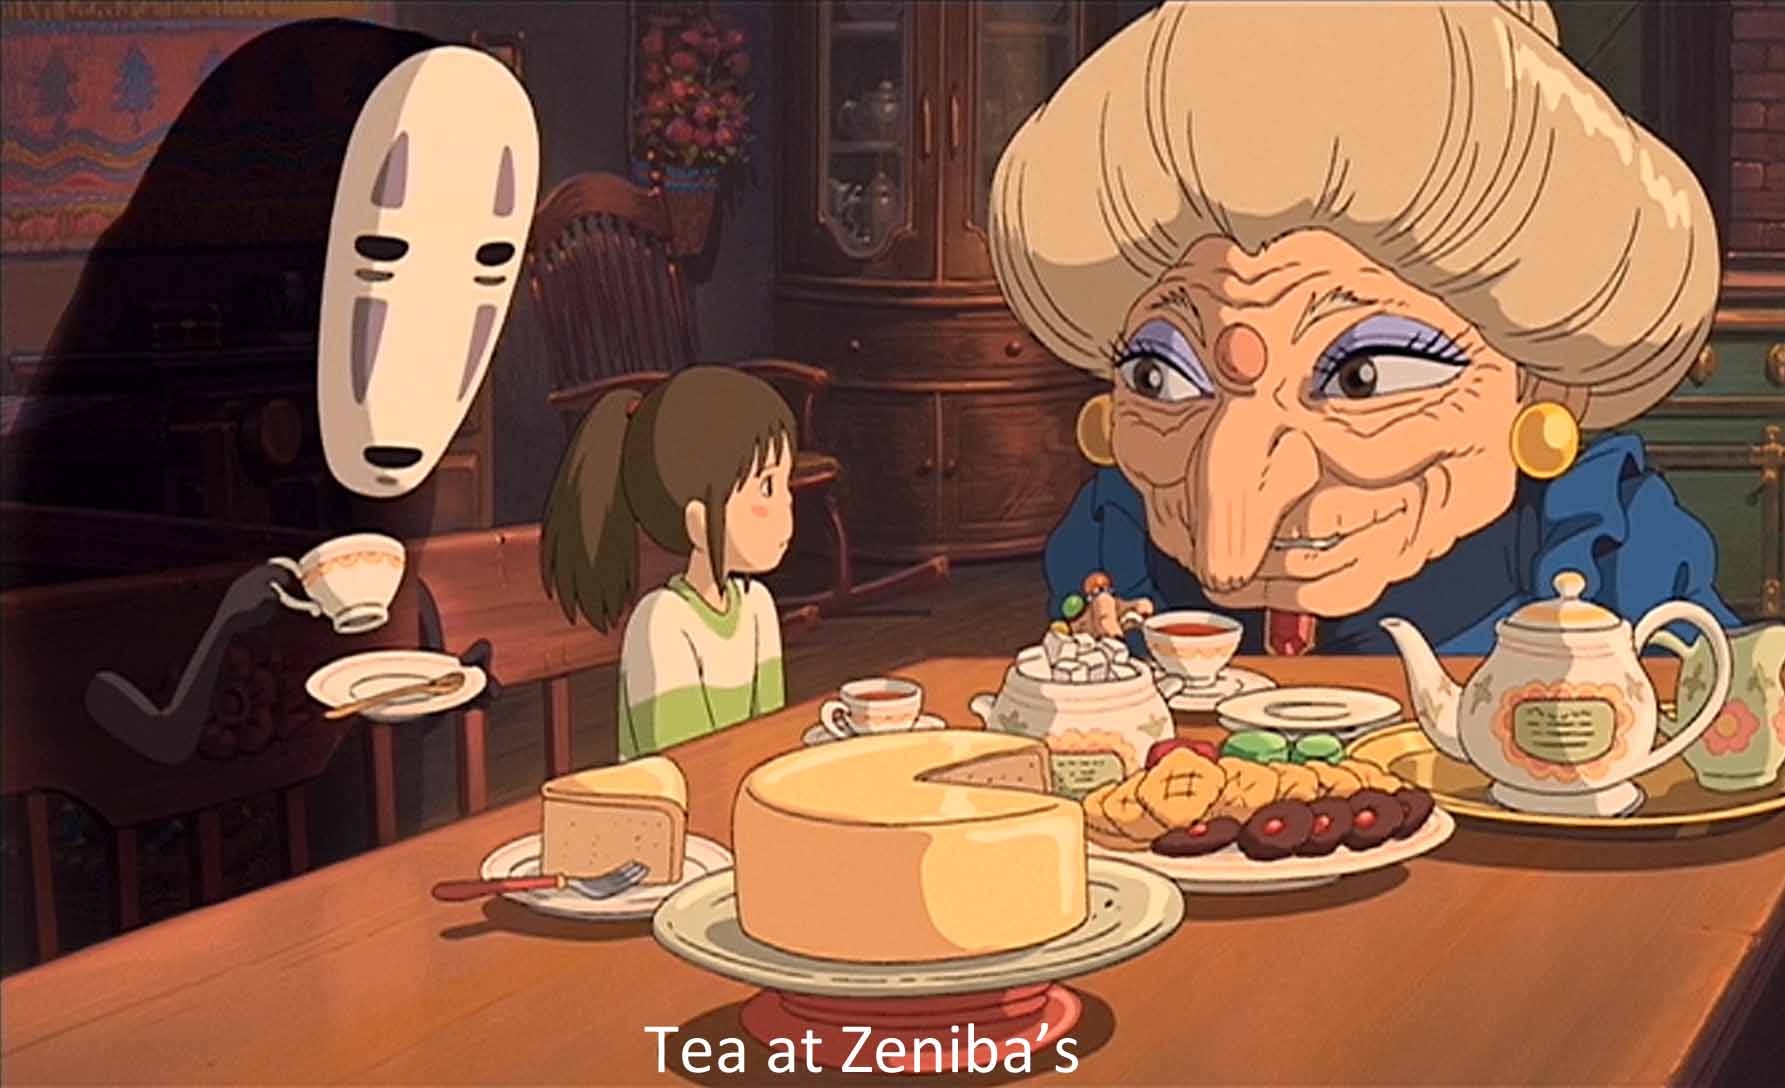 Tea at Zeniba's